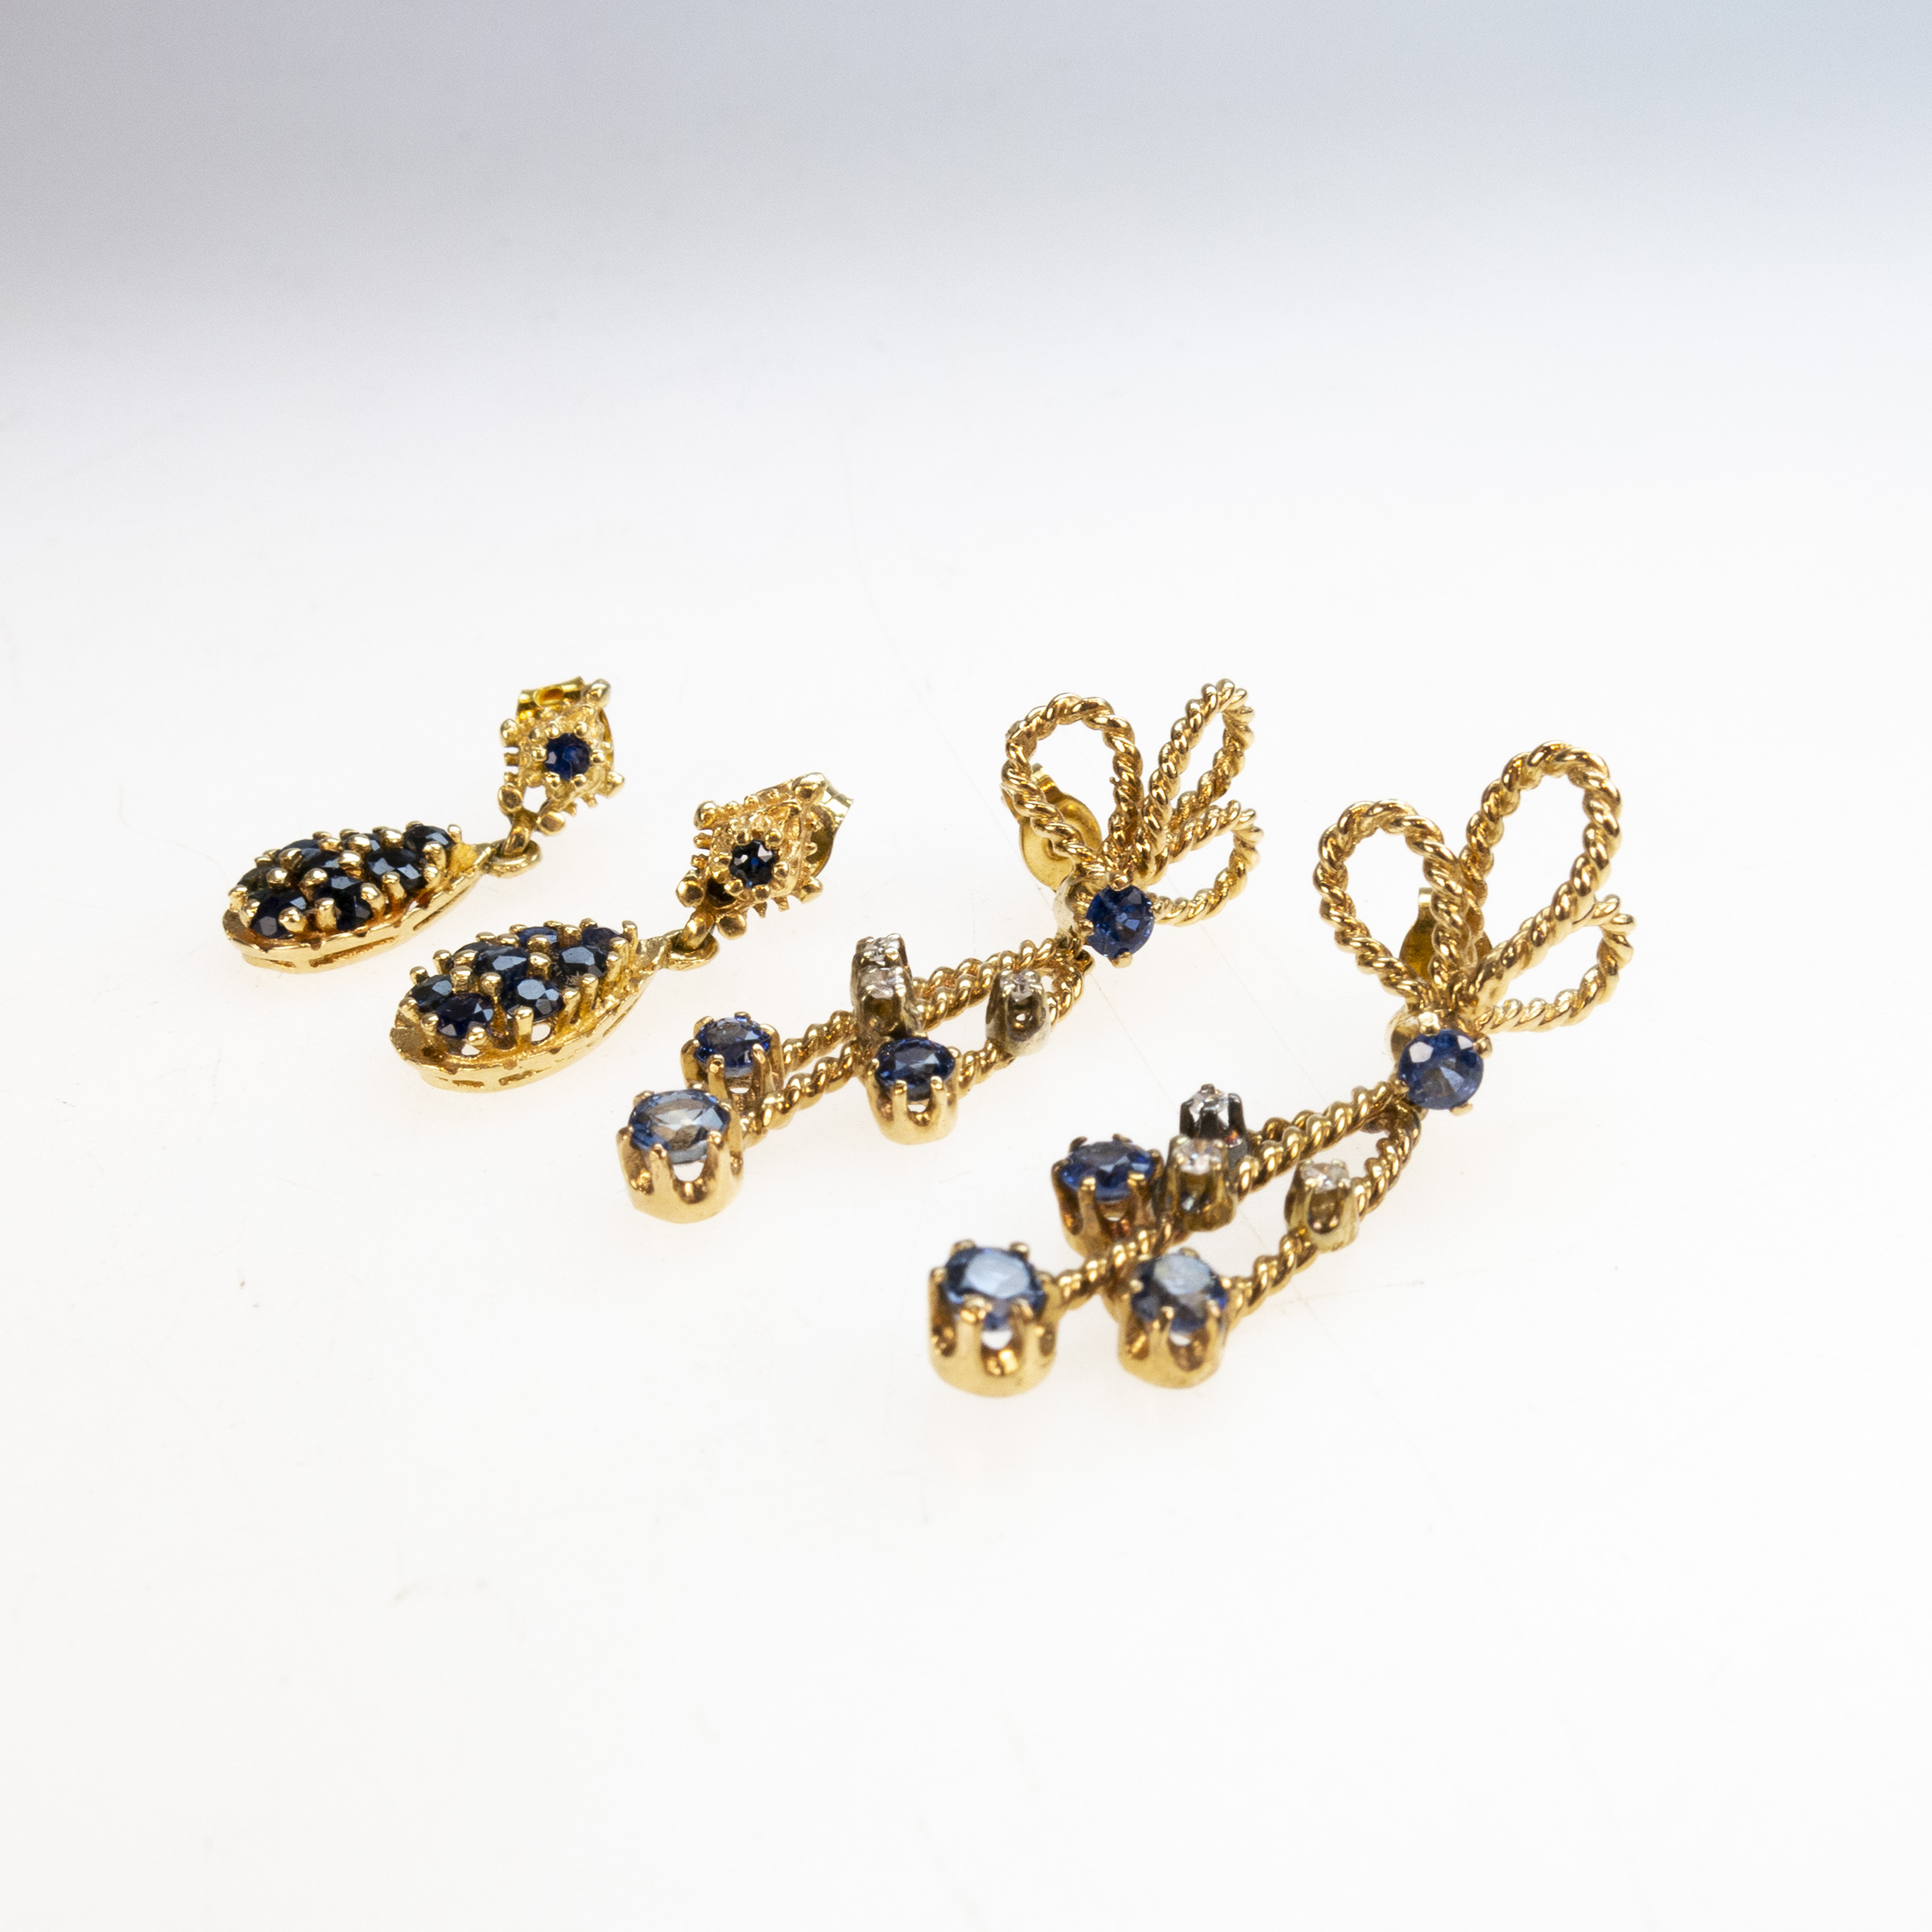 2 Pairs Of 14k Yellow Gold Drop Earrings